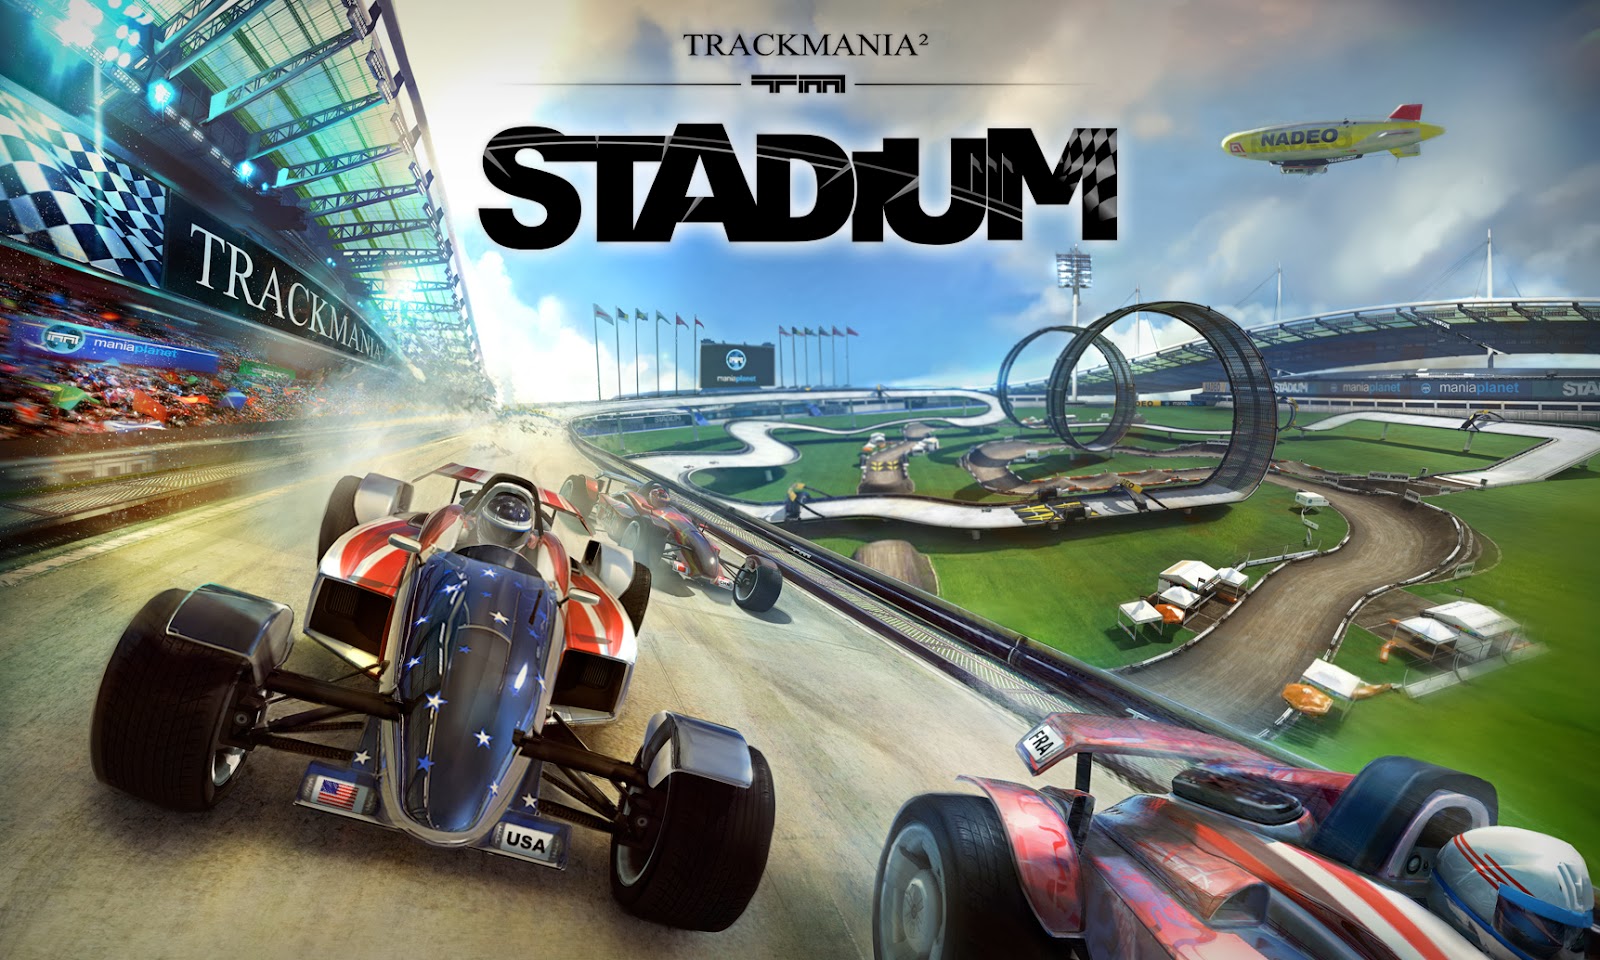 trackmania 2 stadium free download